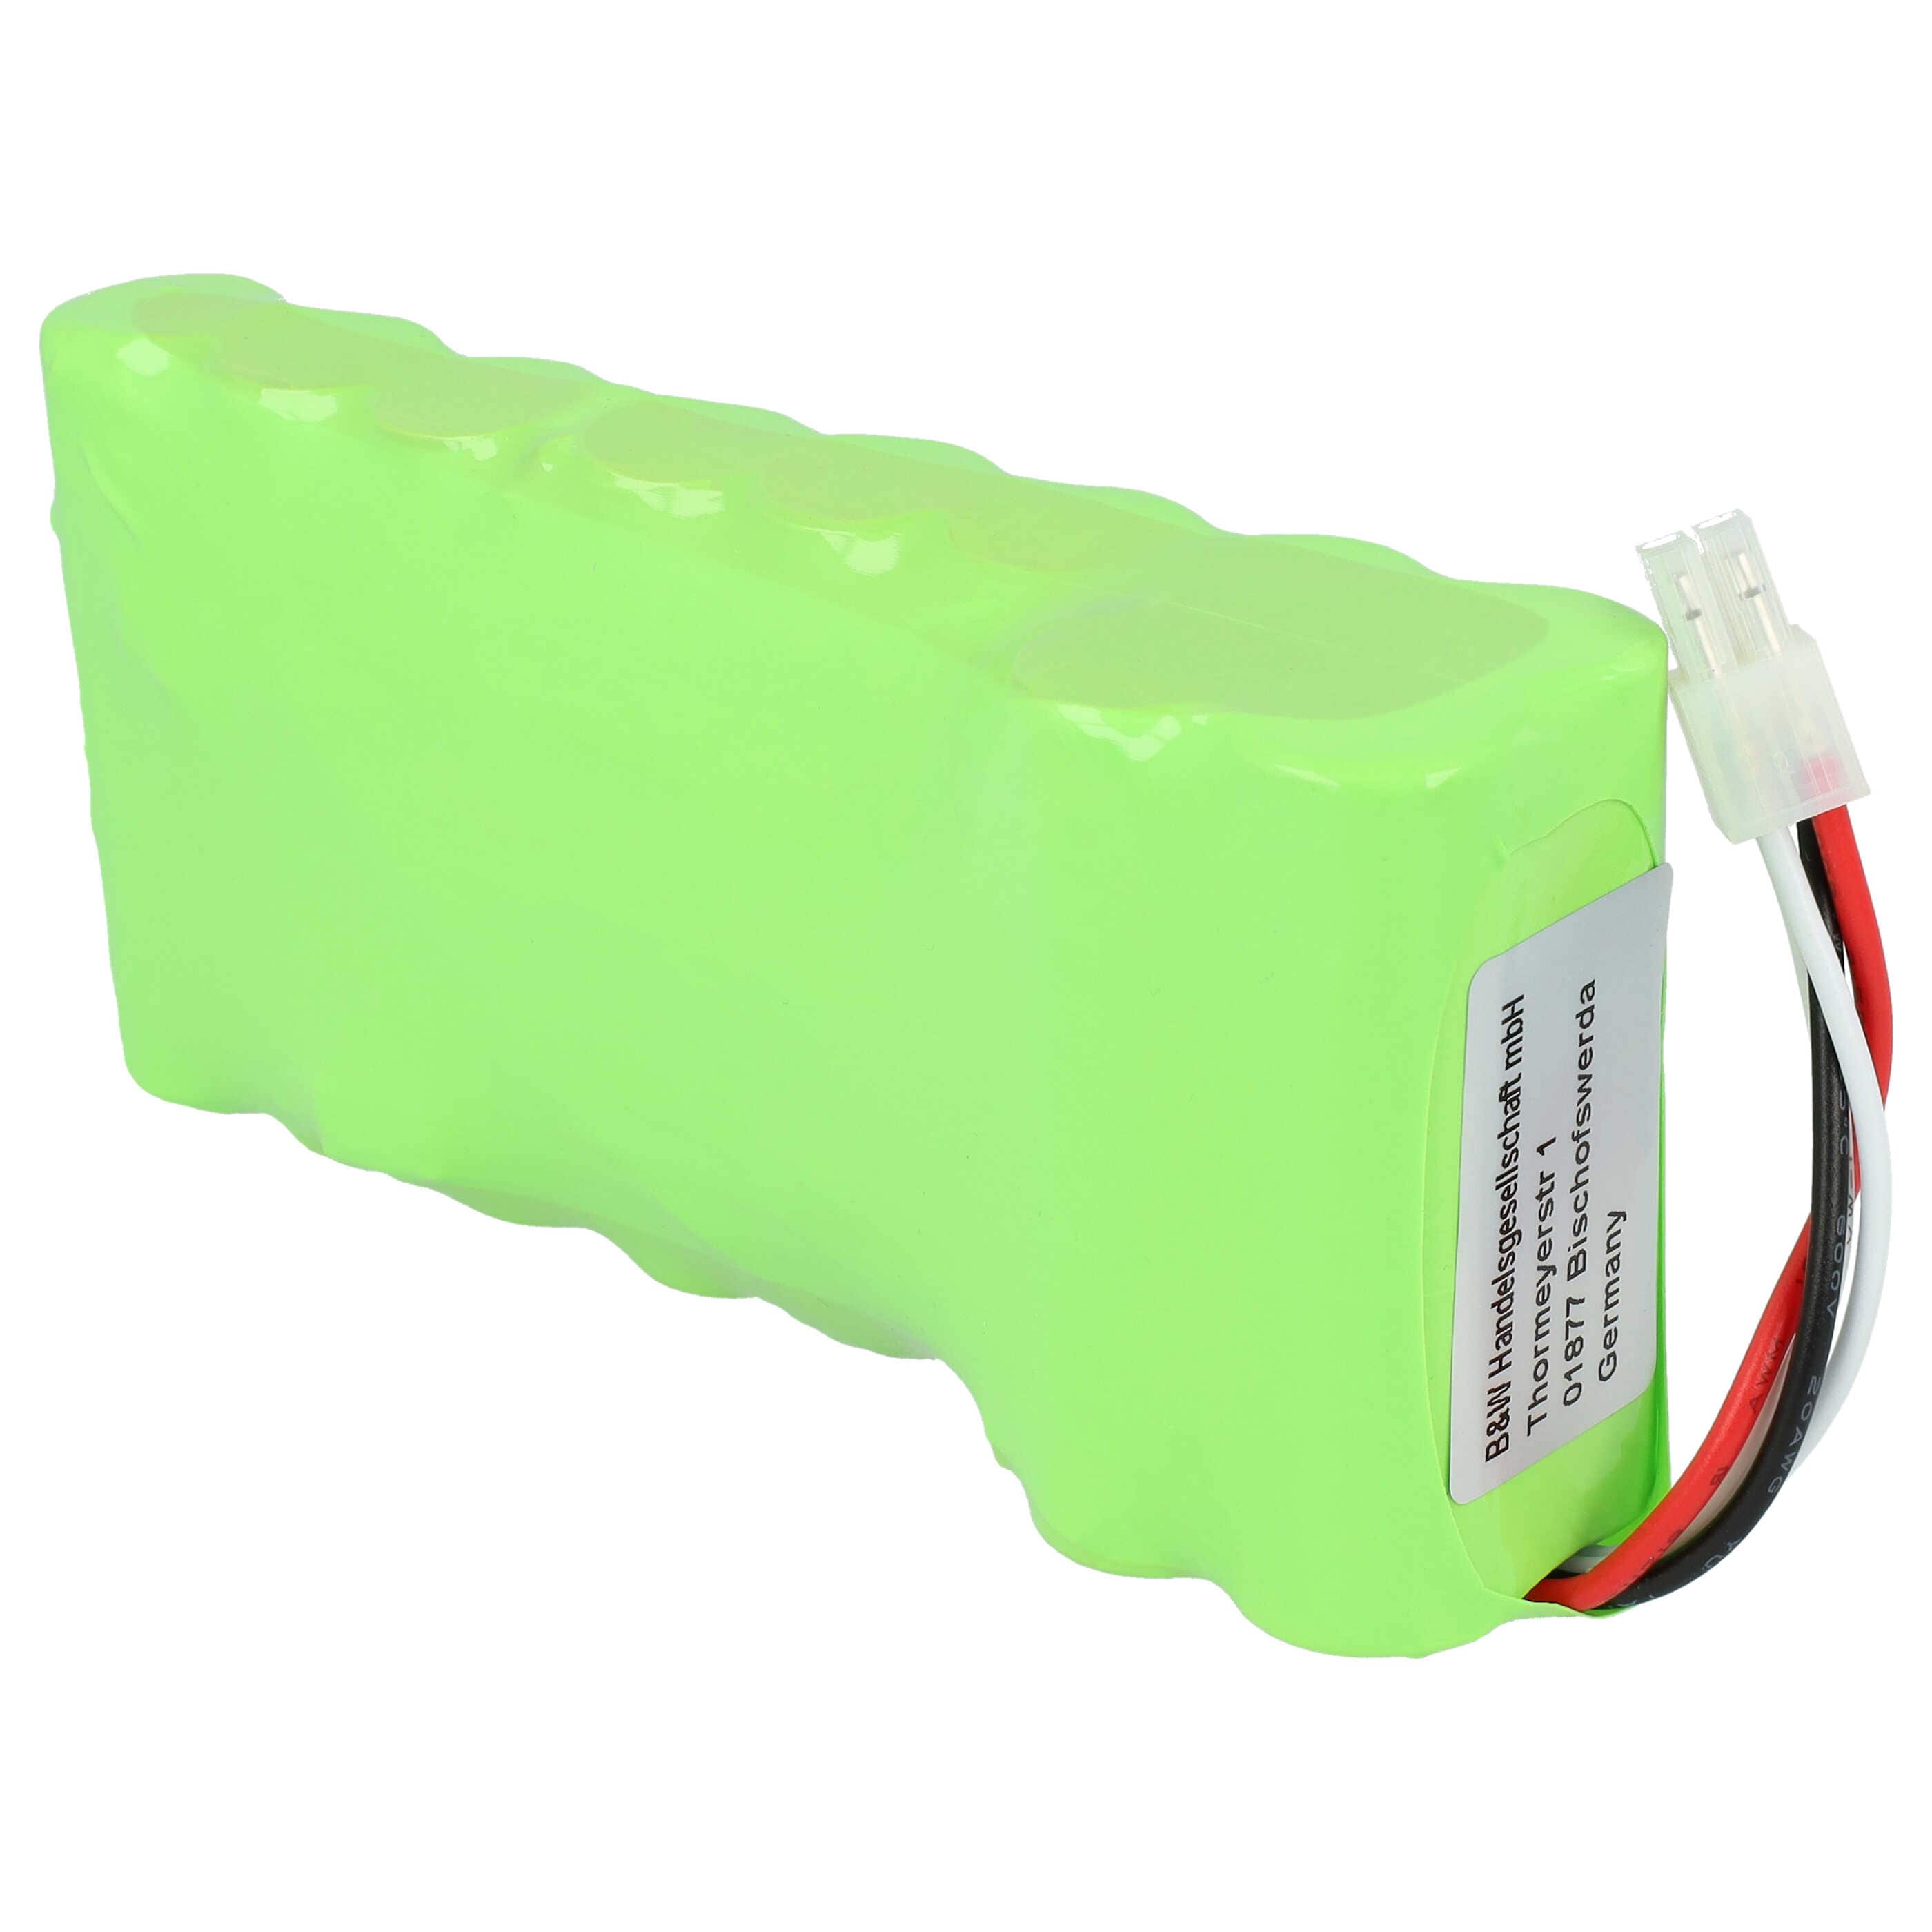 Lawnmower Battery Pack Replacement for Husqvarna 580 68 33-01, 580683301, 5806833-01 - 5000mAh 18V Li-Ion